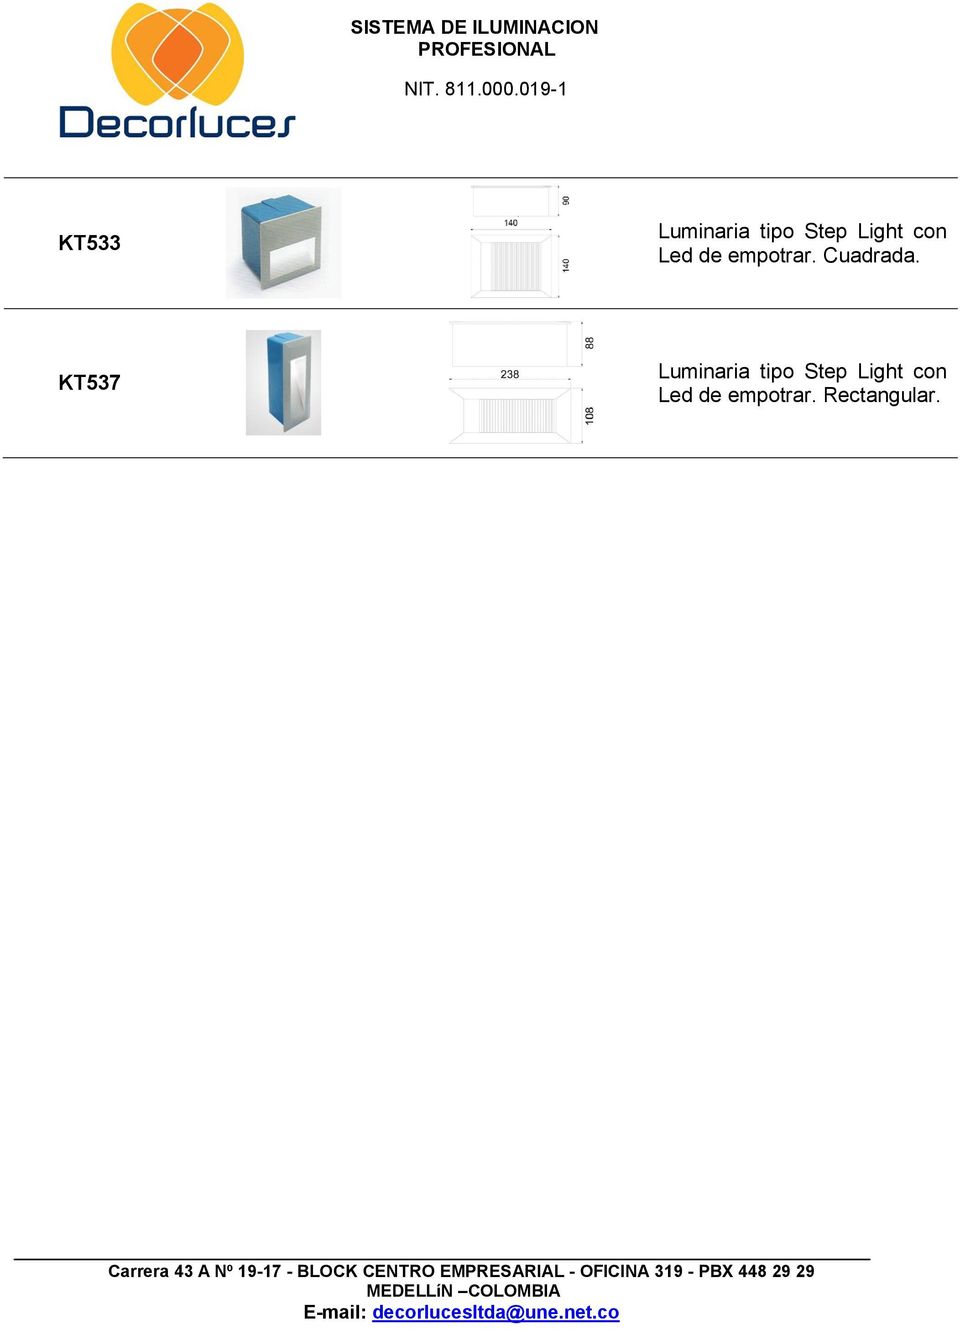 KT537 Luminaria tipo Step Light